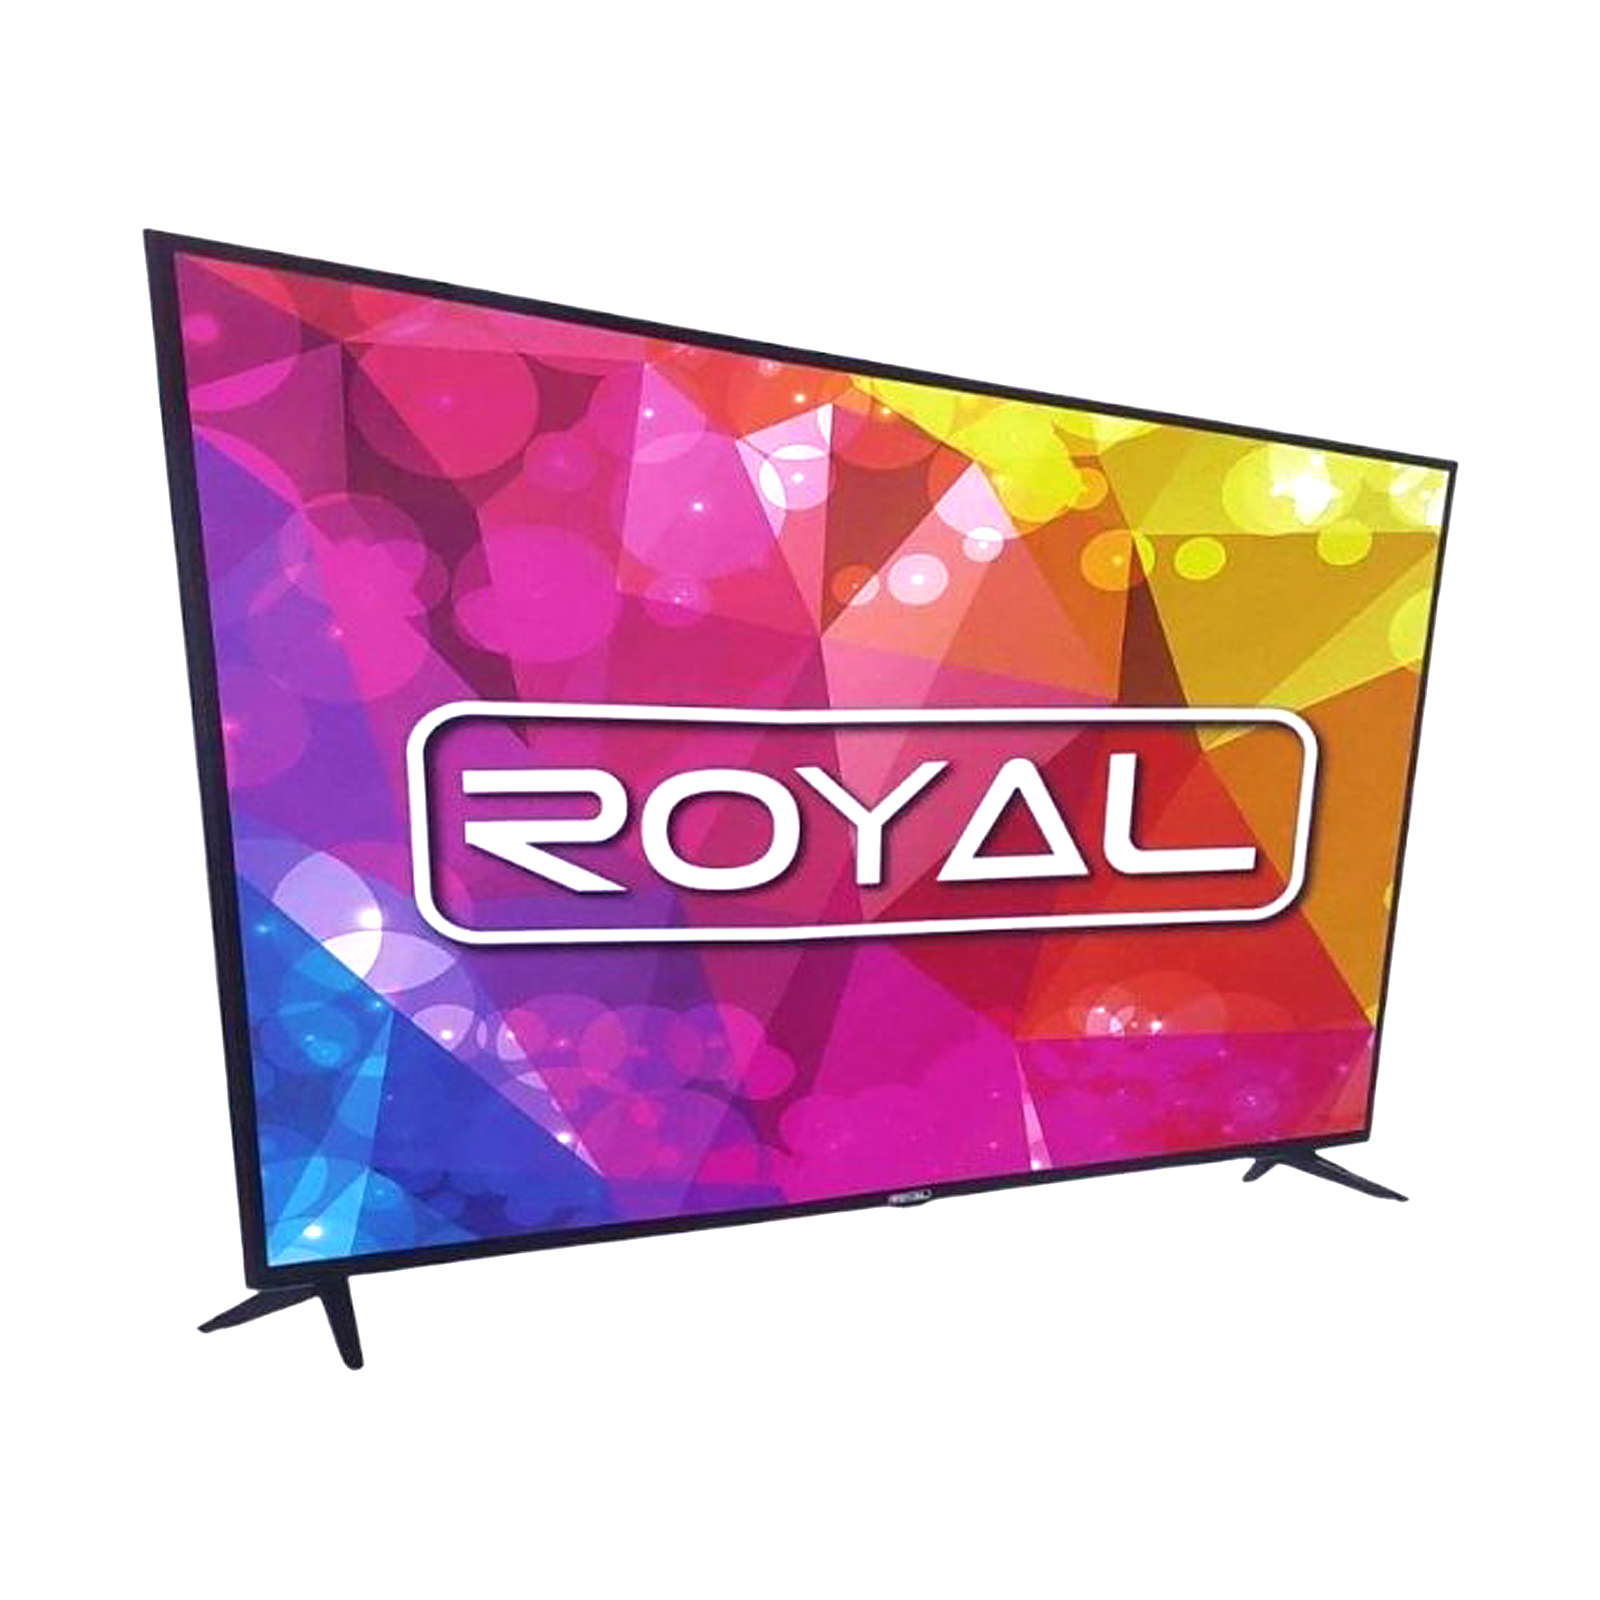 ROYAL Smart Tv 43″ FHD – Rapicarga Travel